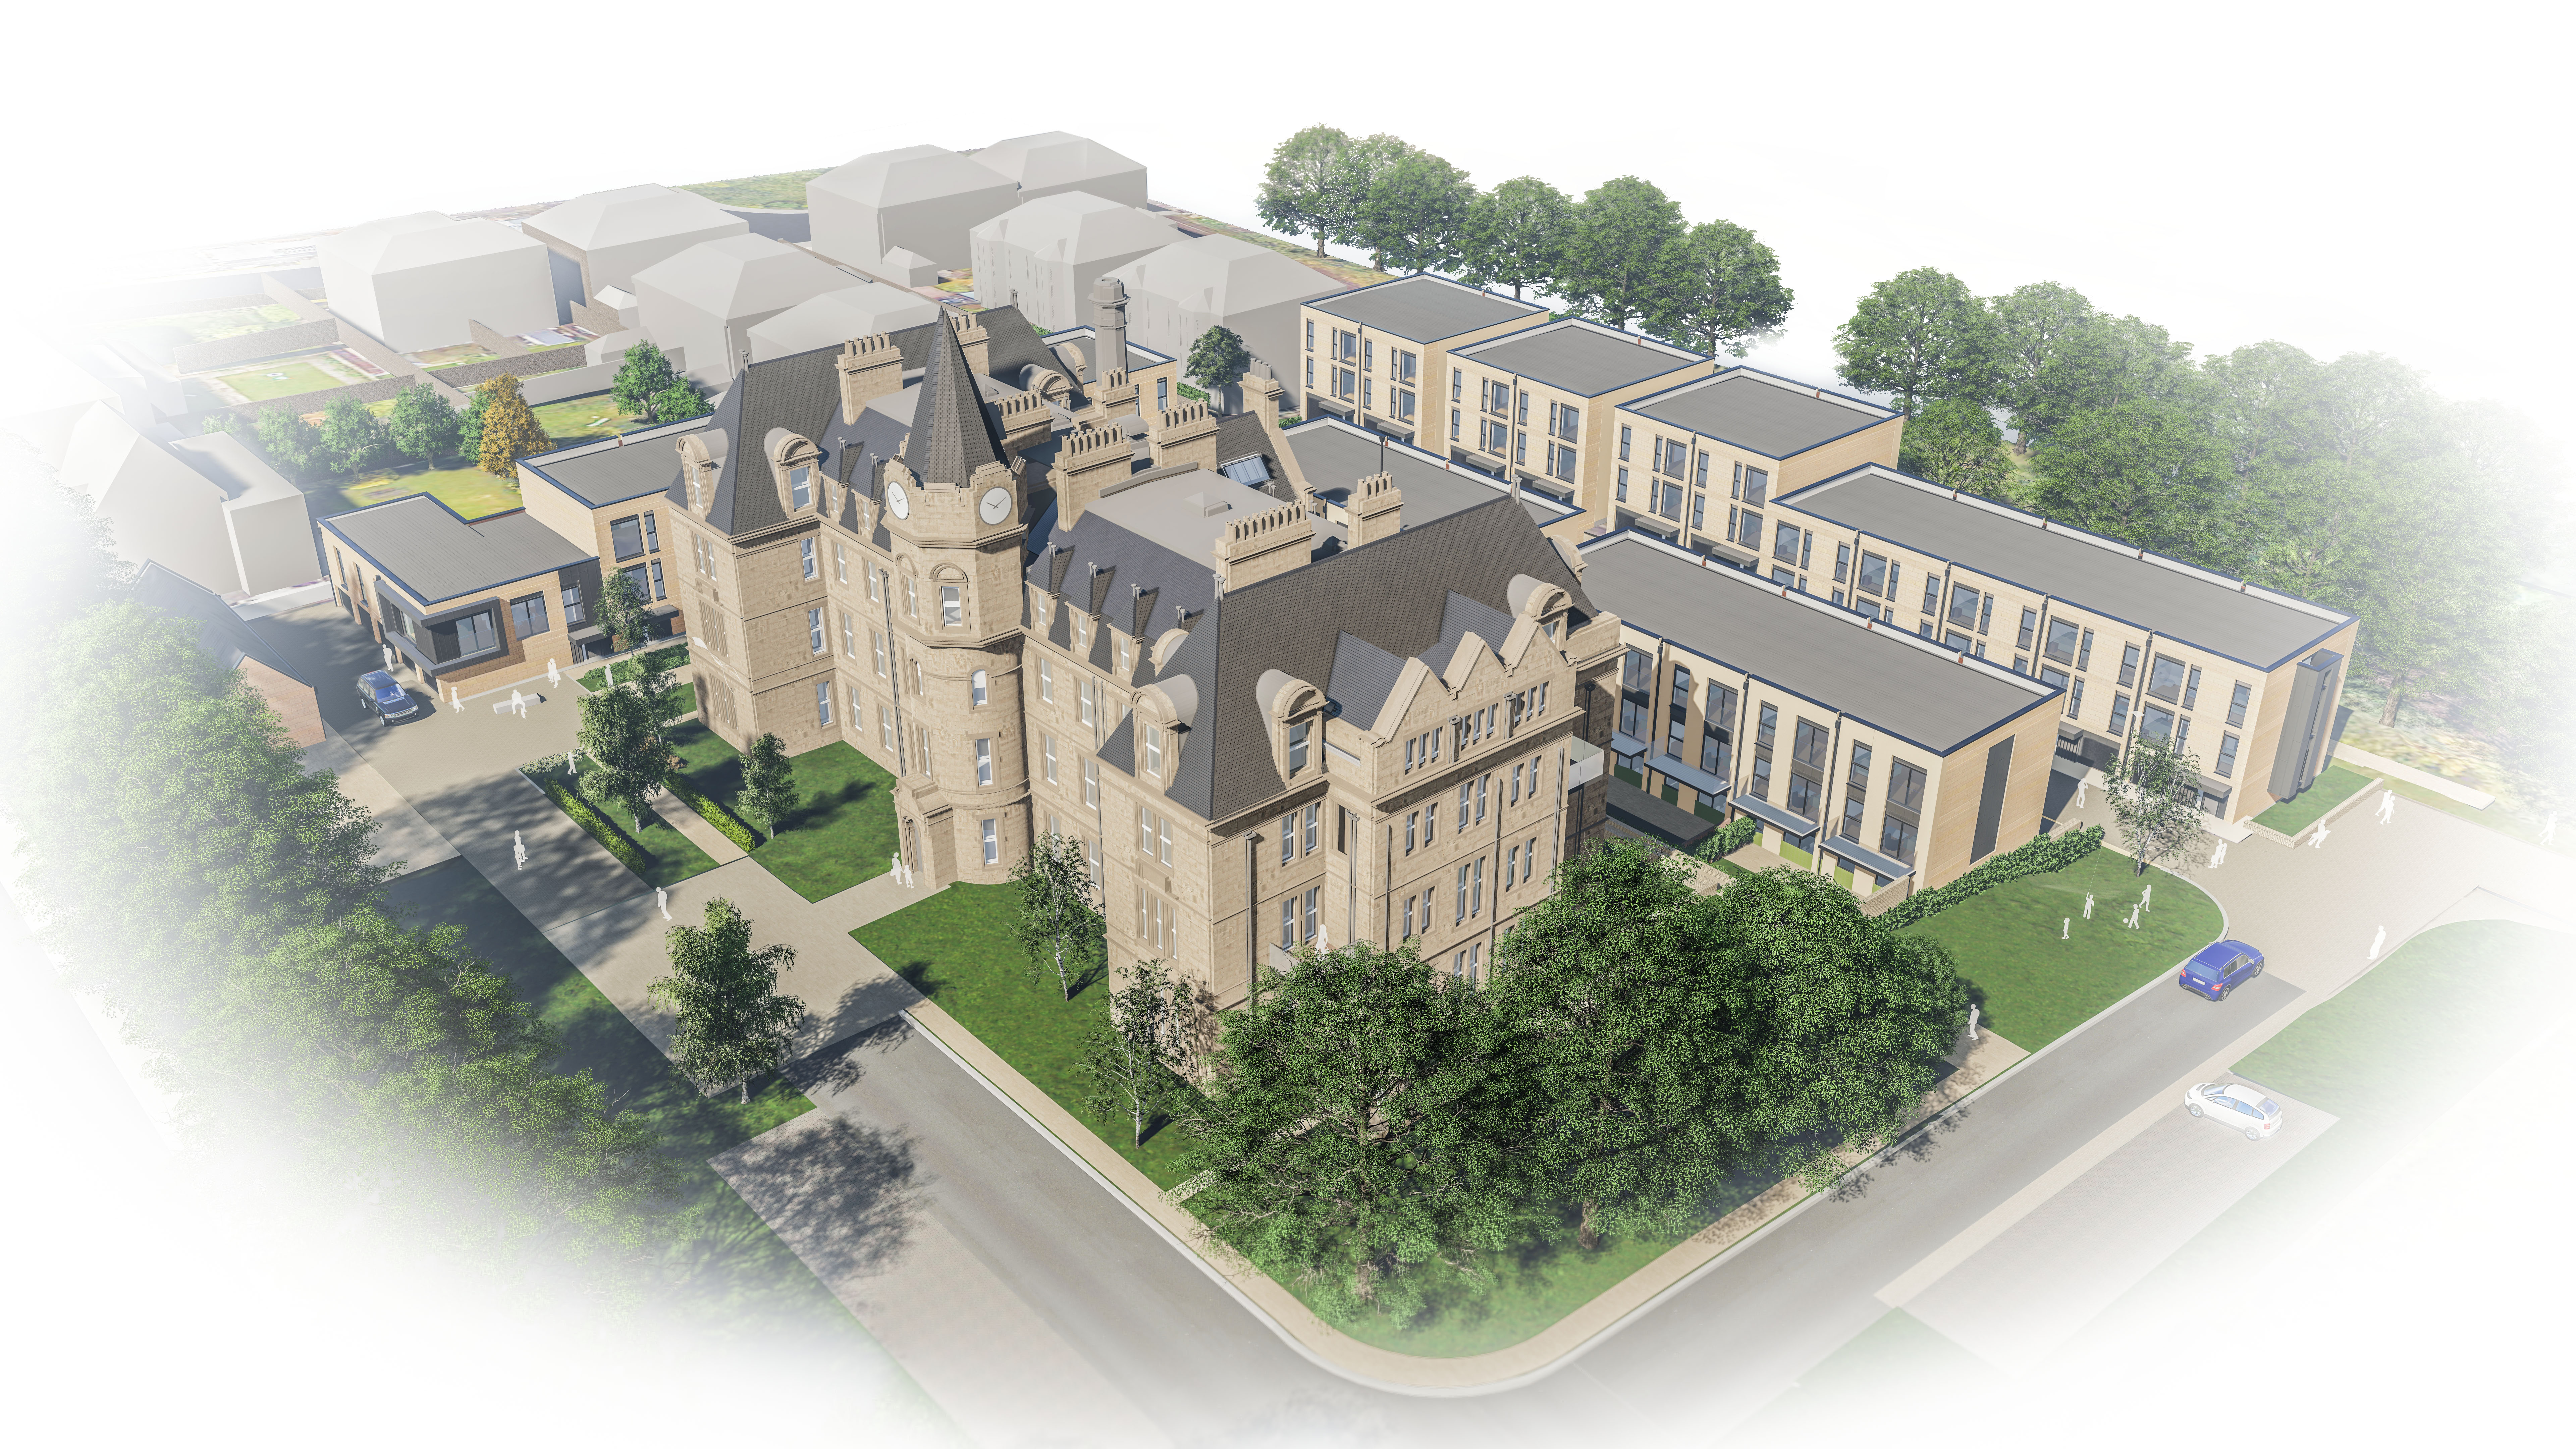 Plans approved for housing redevelopment of historic Edinburgh school